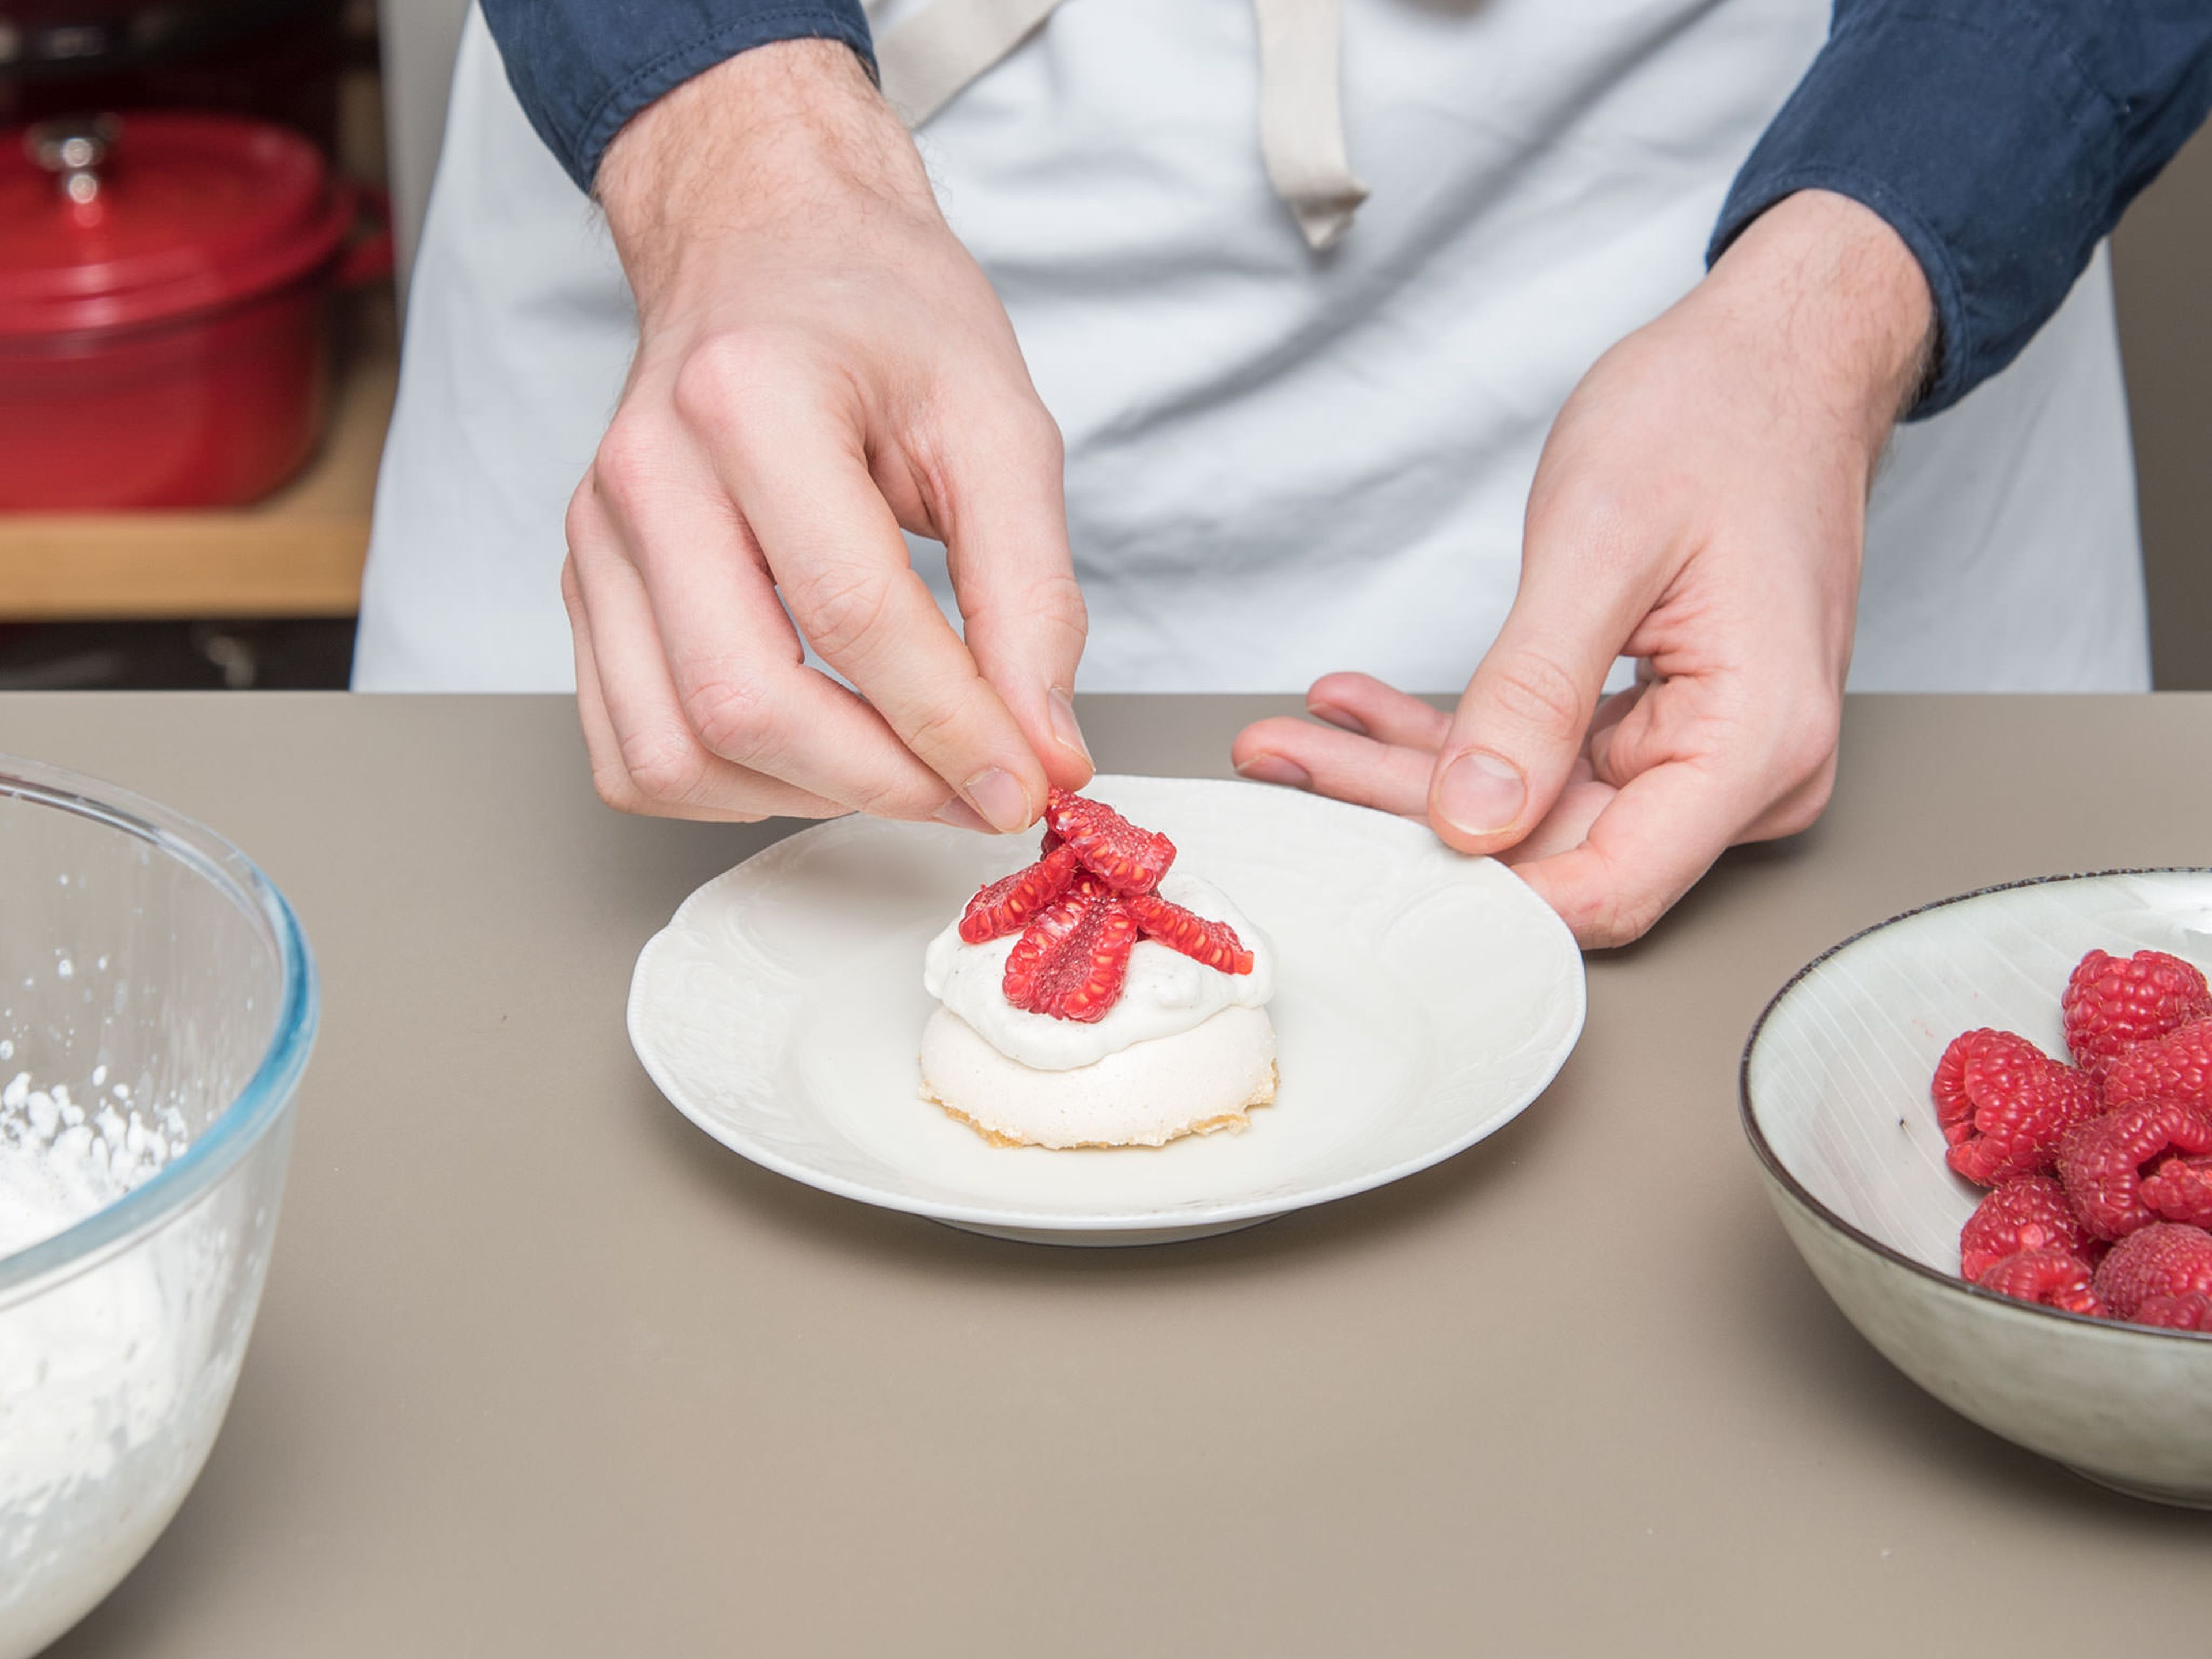 Top the Pavlovas with vanilla cream and garnish with halved raspberries. Enjoy!